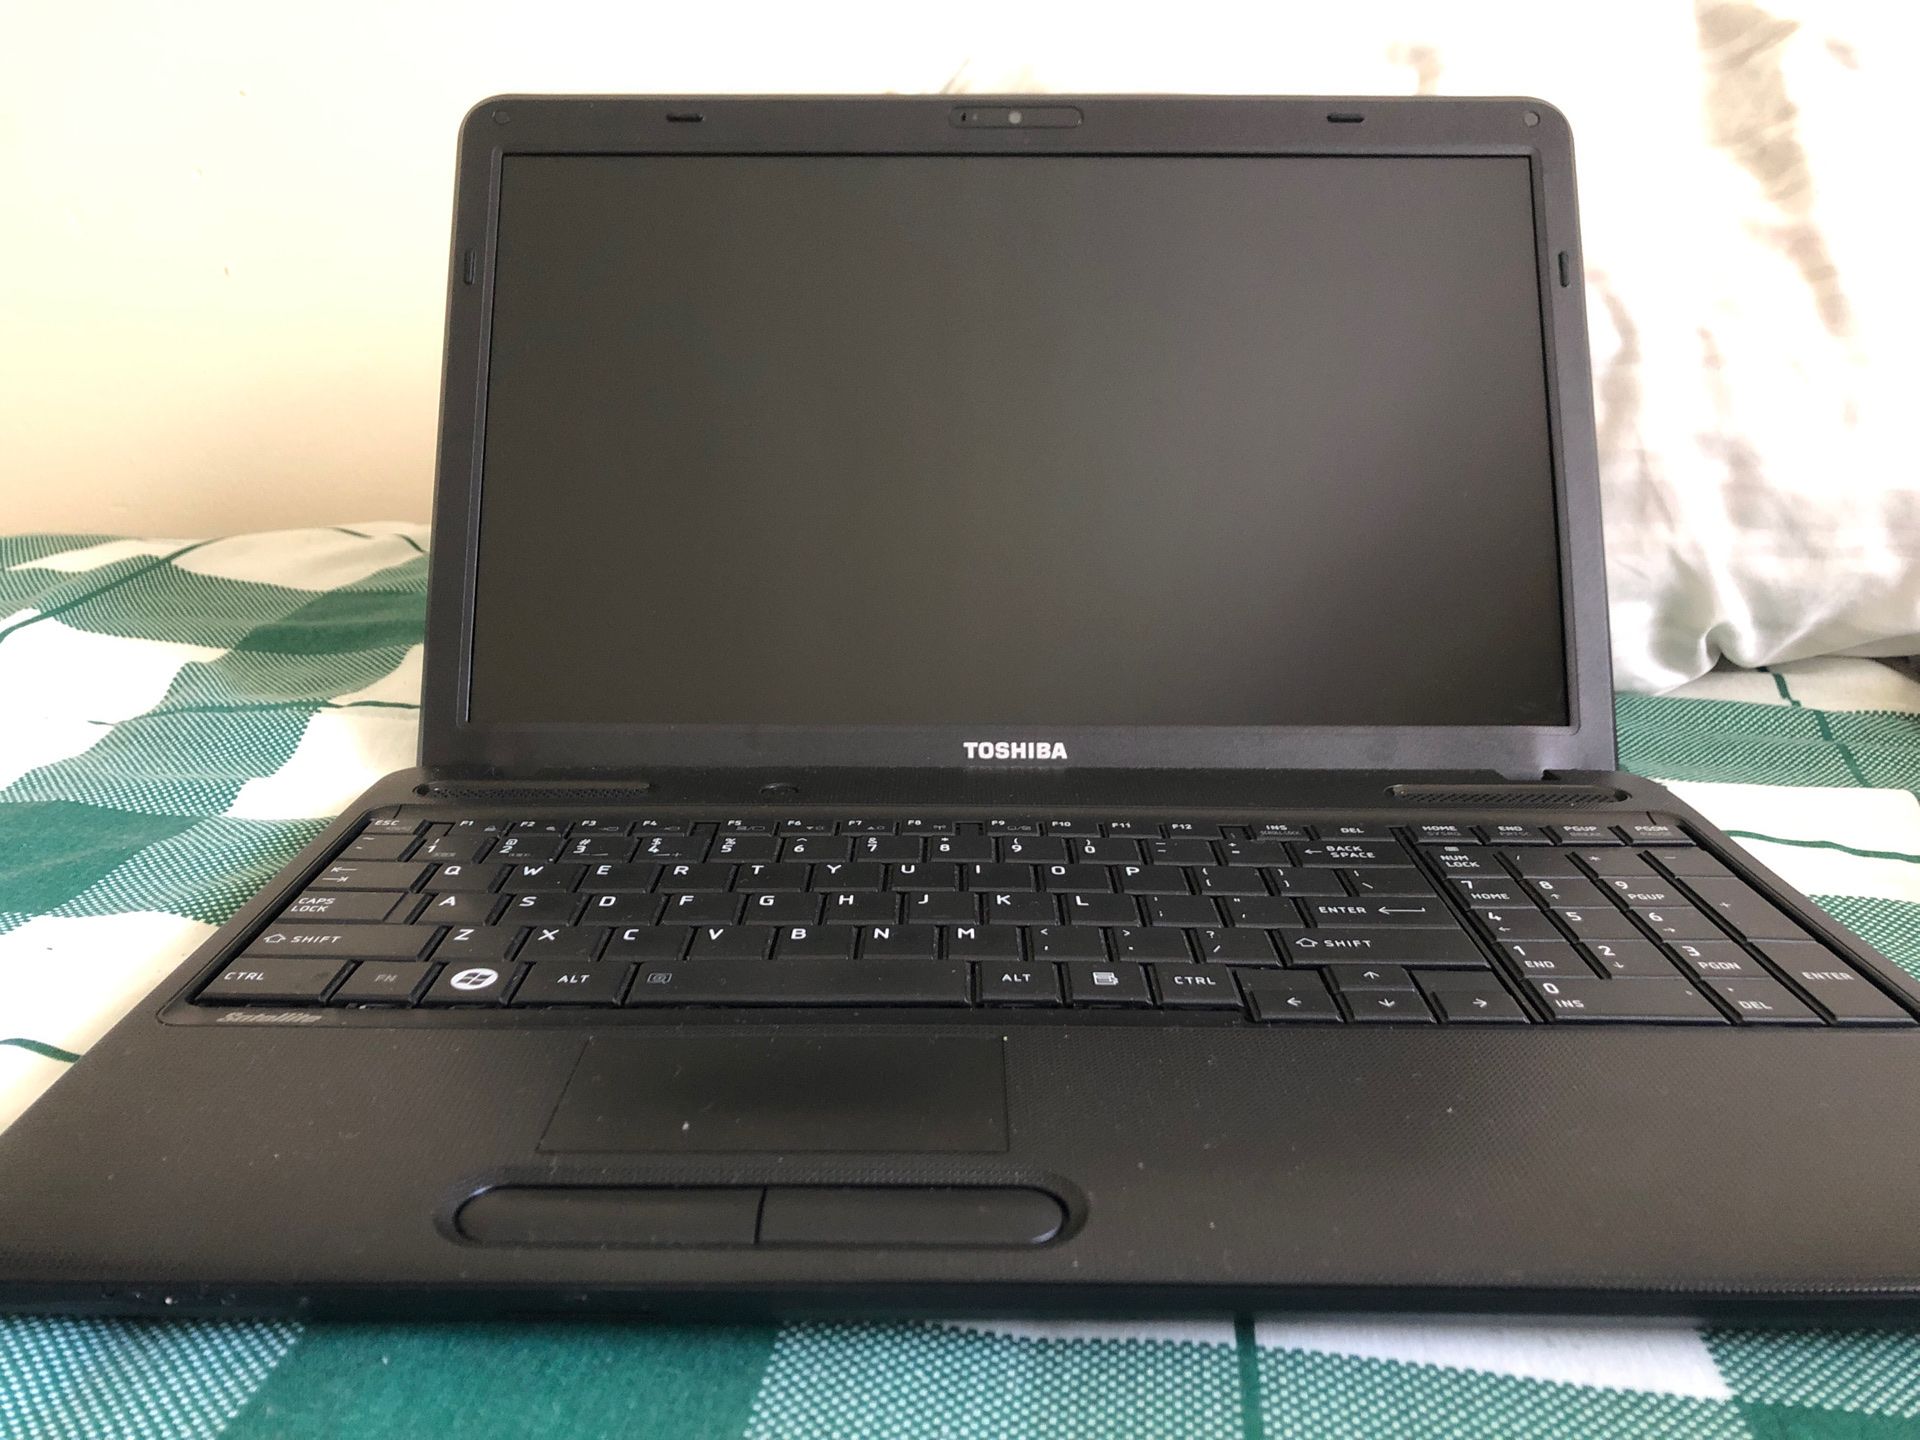 Toshiba Satellite C655 Laptop